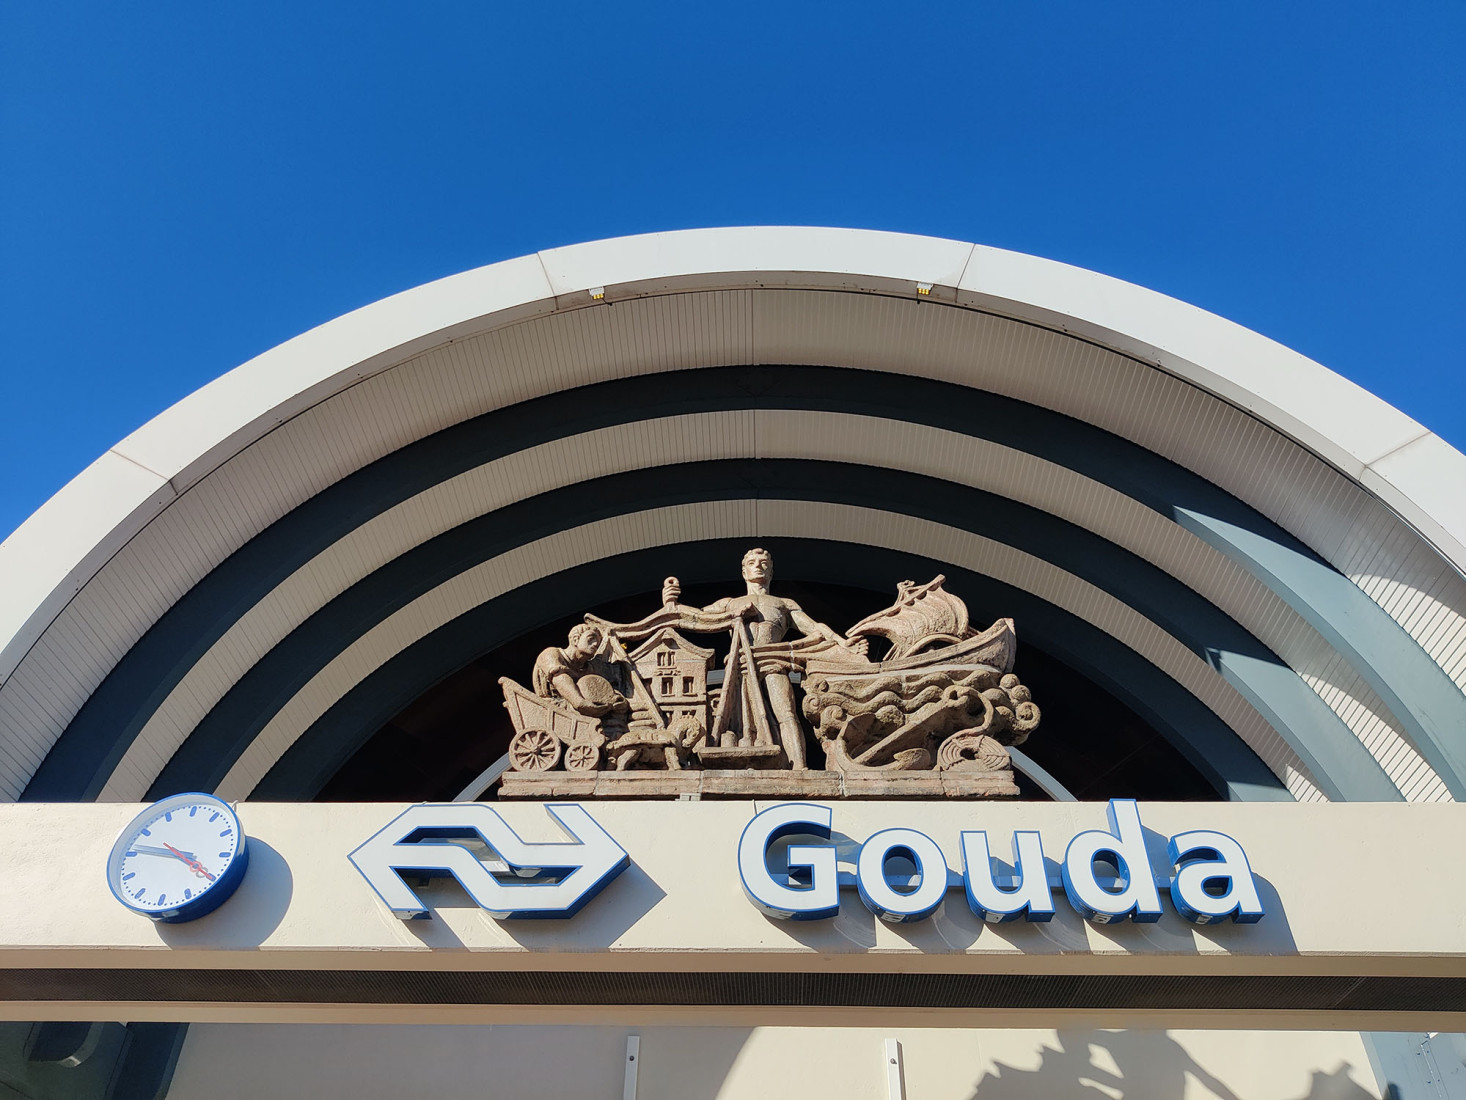 Gouda station